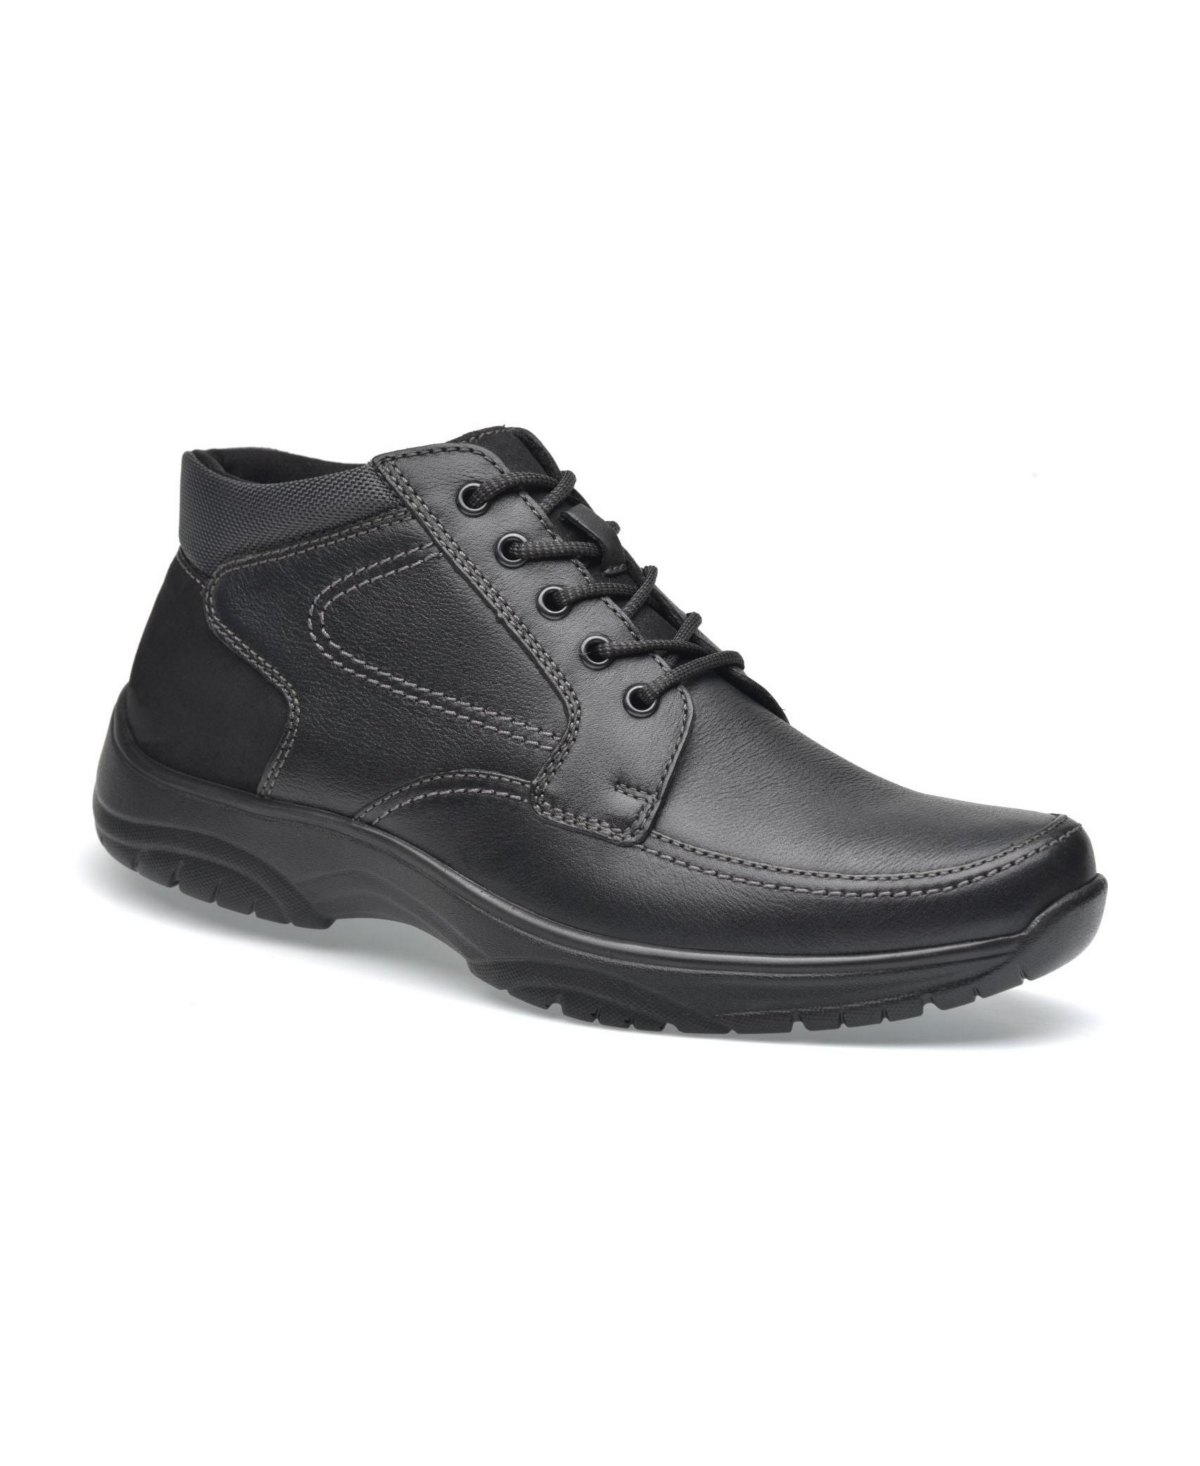 Men's Premium Comfort Leather Low Ankle Boots - Black